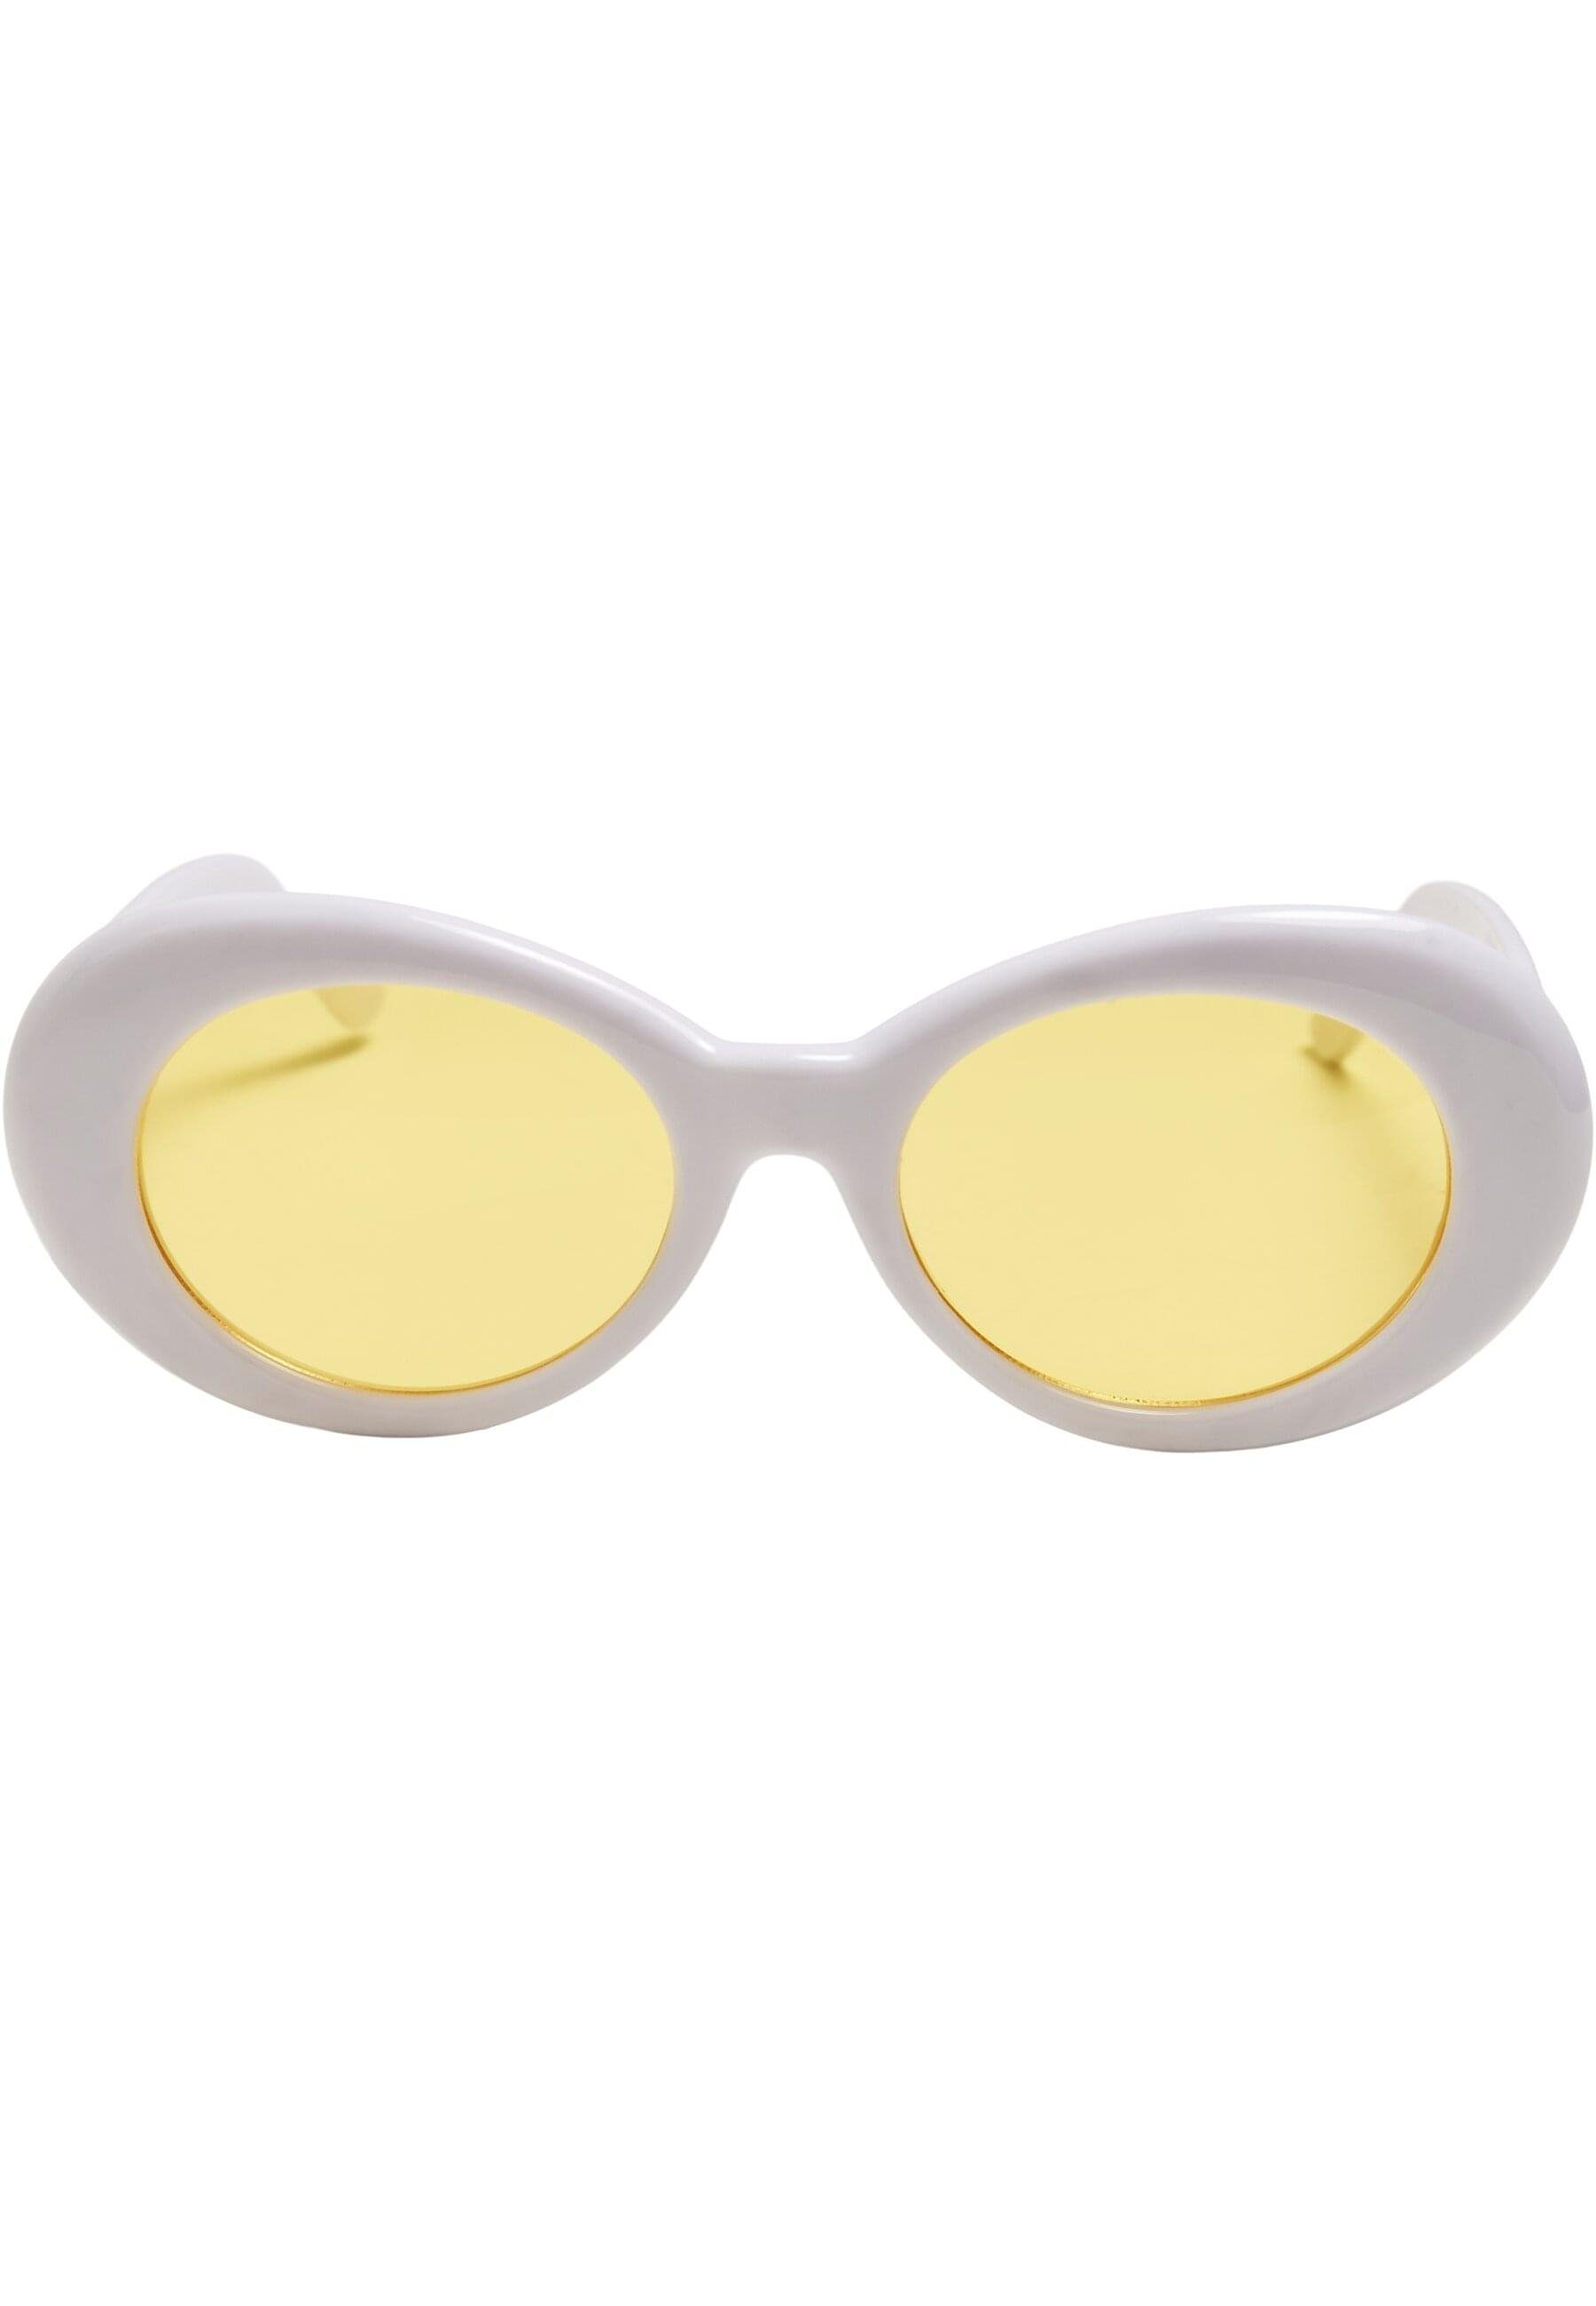 Sonnenbrille wht/yel Unisex 2 Tone Sunglasses TB2250 Tone CLASSICS 2 URBAN